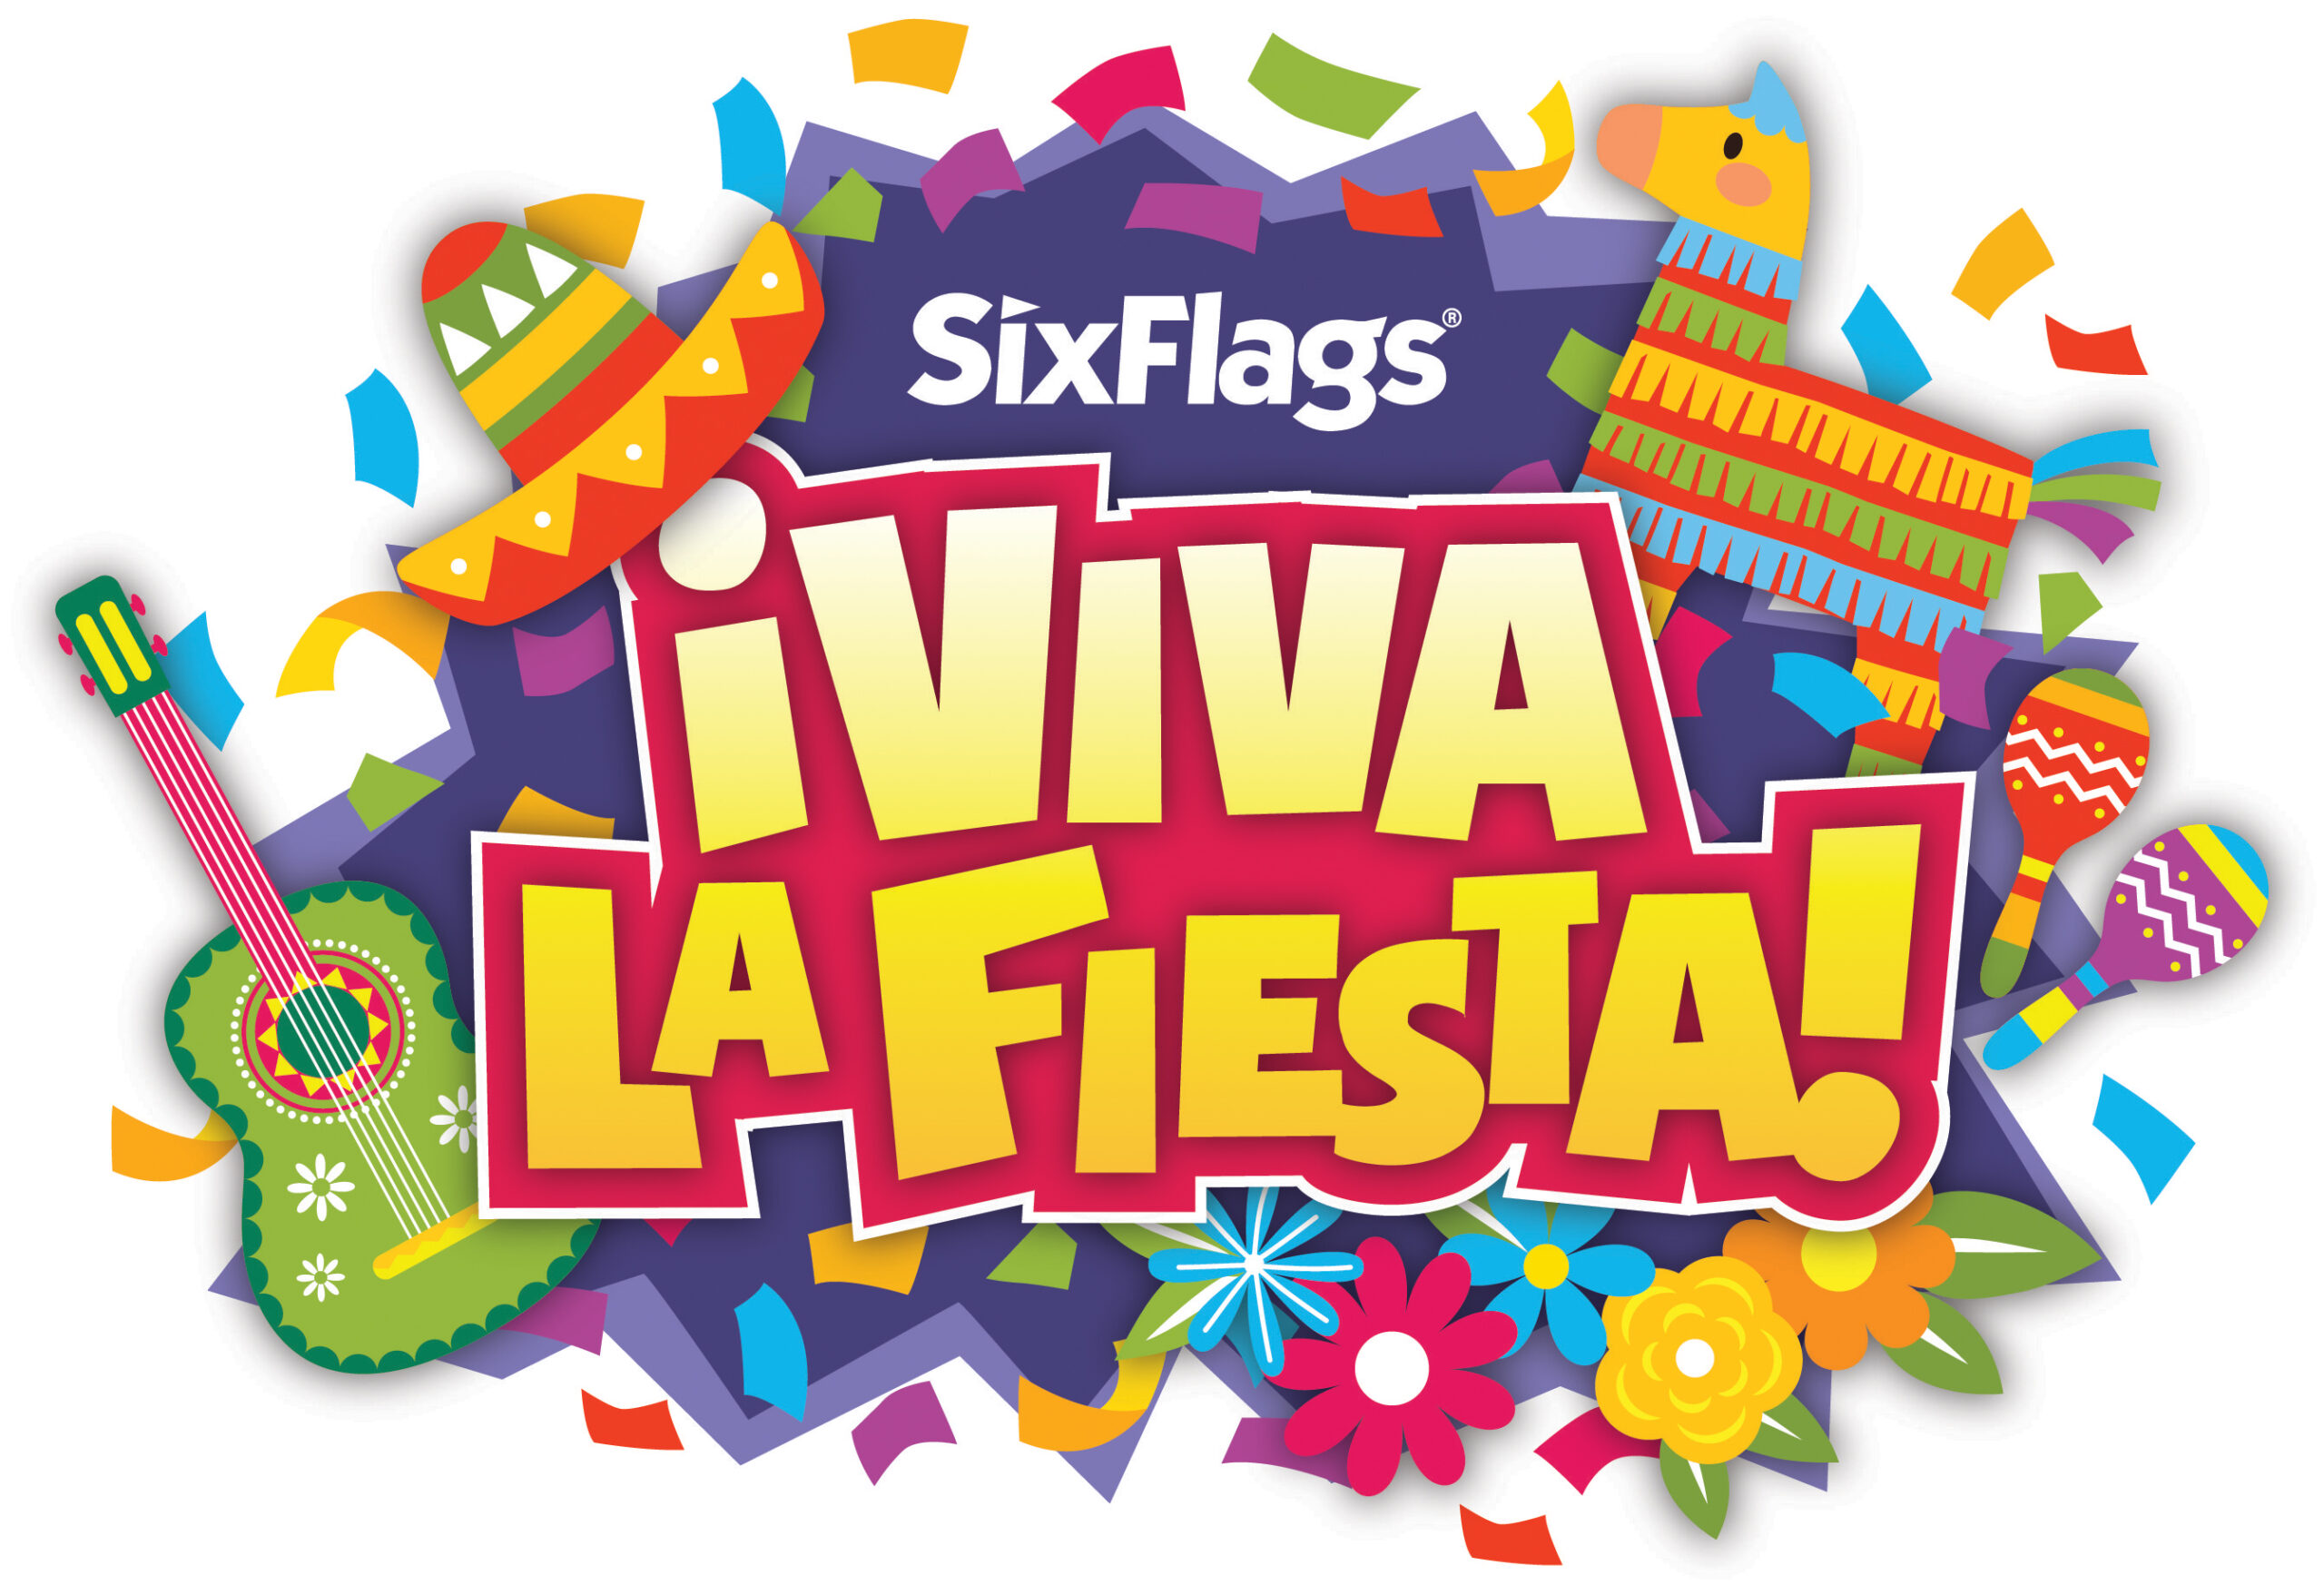 New ¡Viva la Fiesta! Festival coming to Six Flags Over Texas